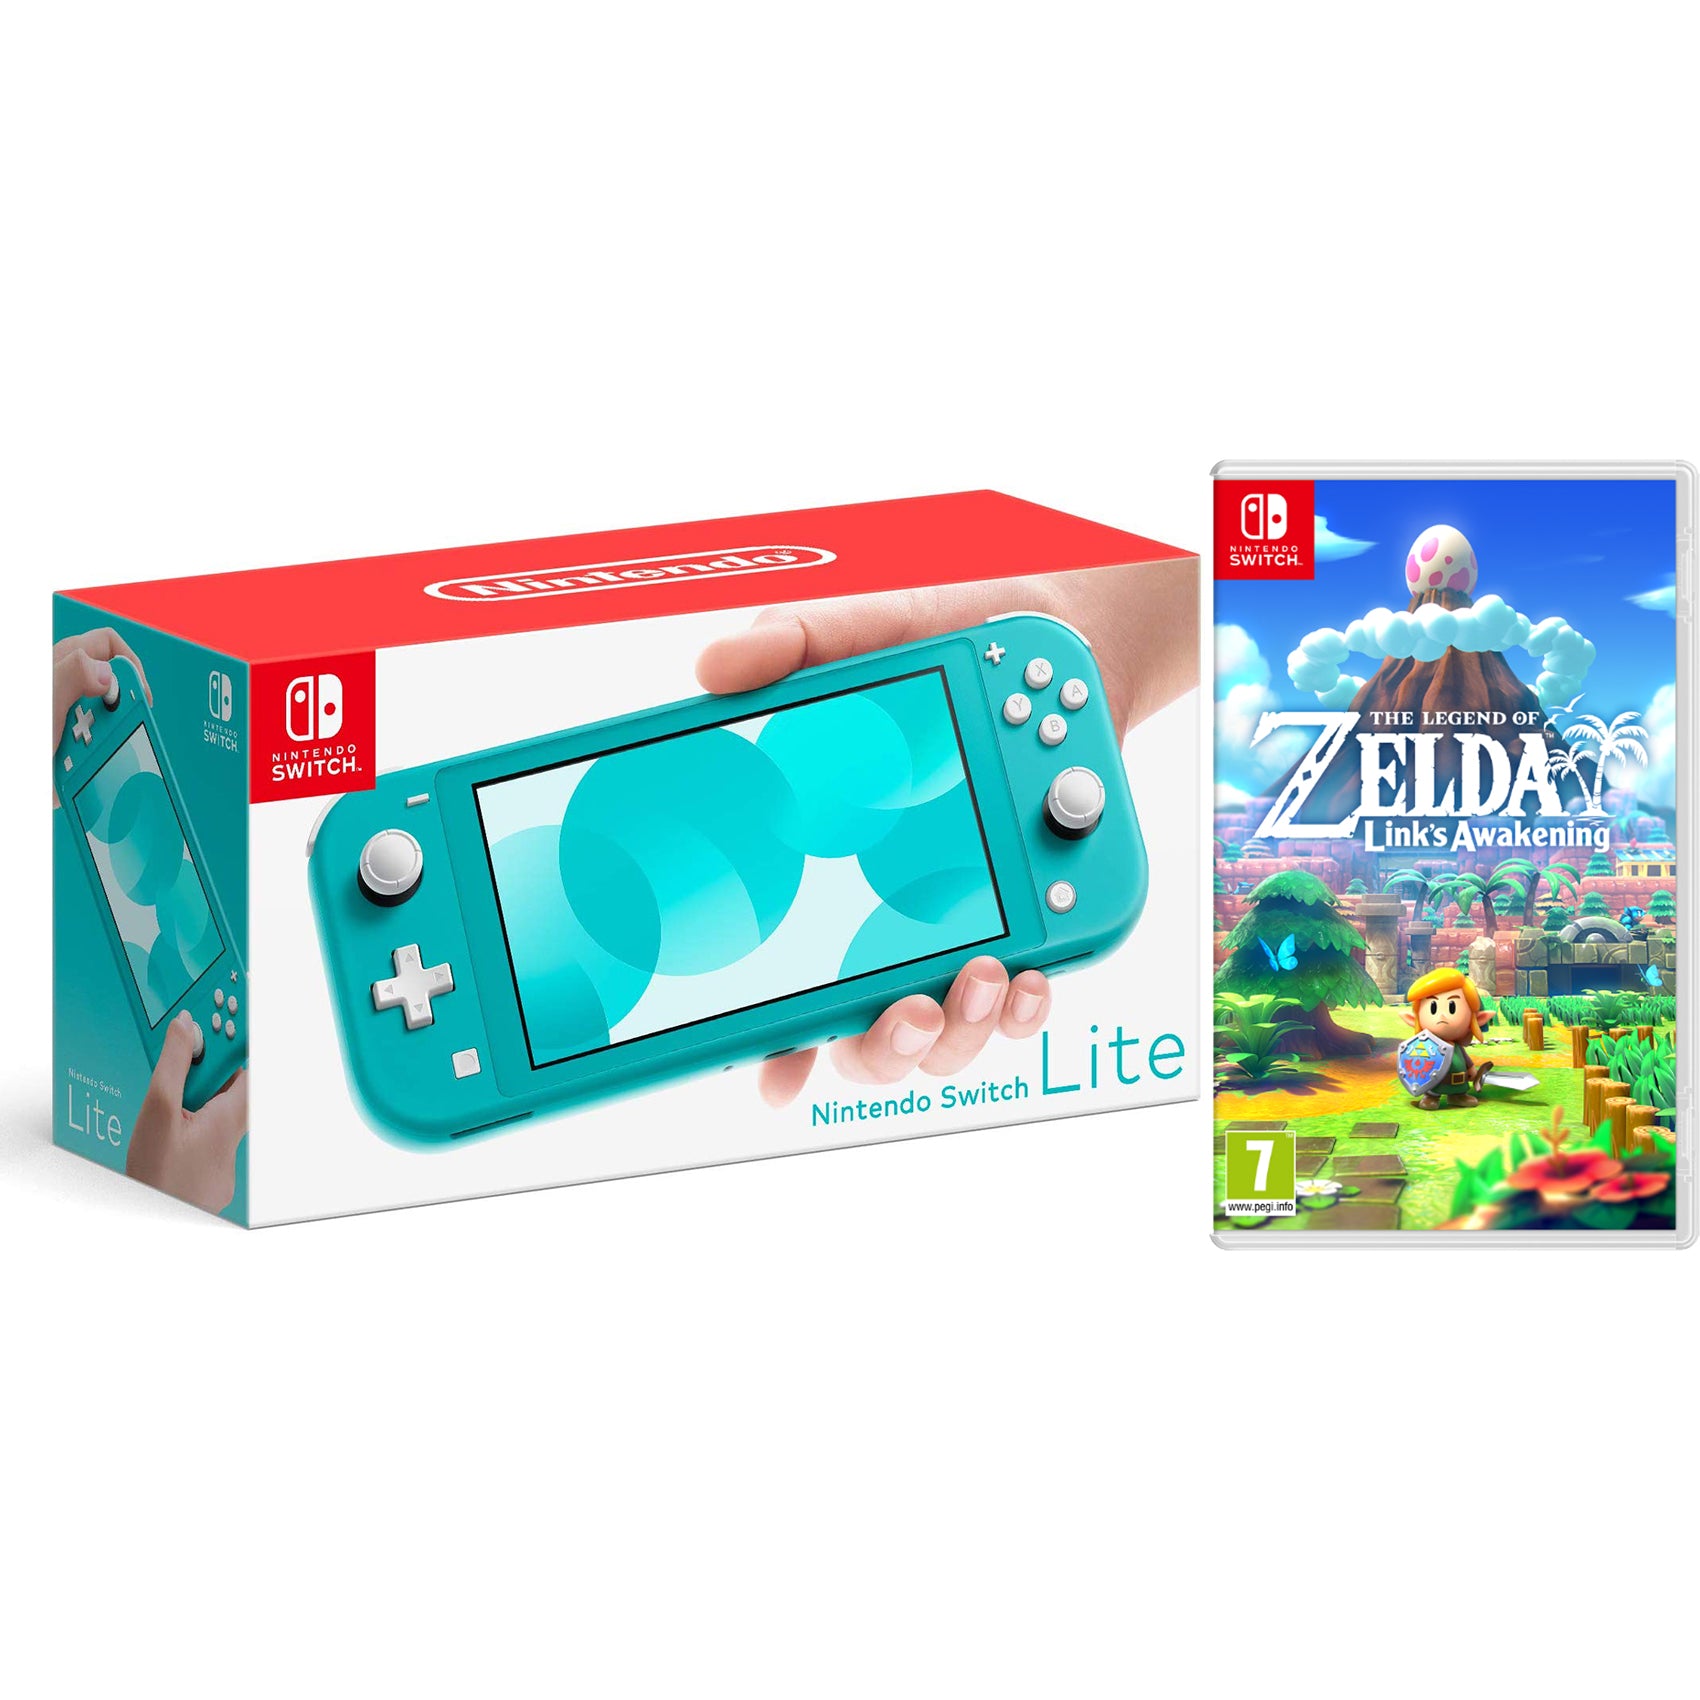 Nintendo Switch Lite 32GB Turquoise and The Legend of Zelda: Link's Awakening Bundle - Pro-Distributing